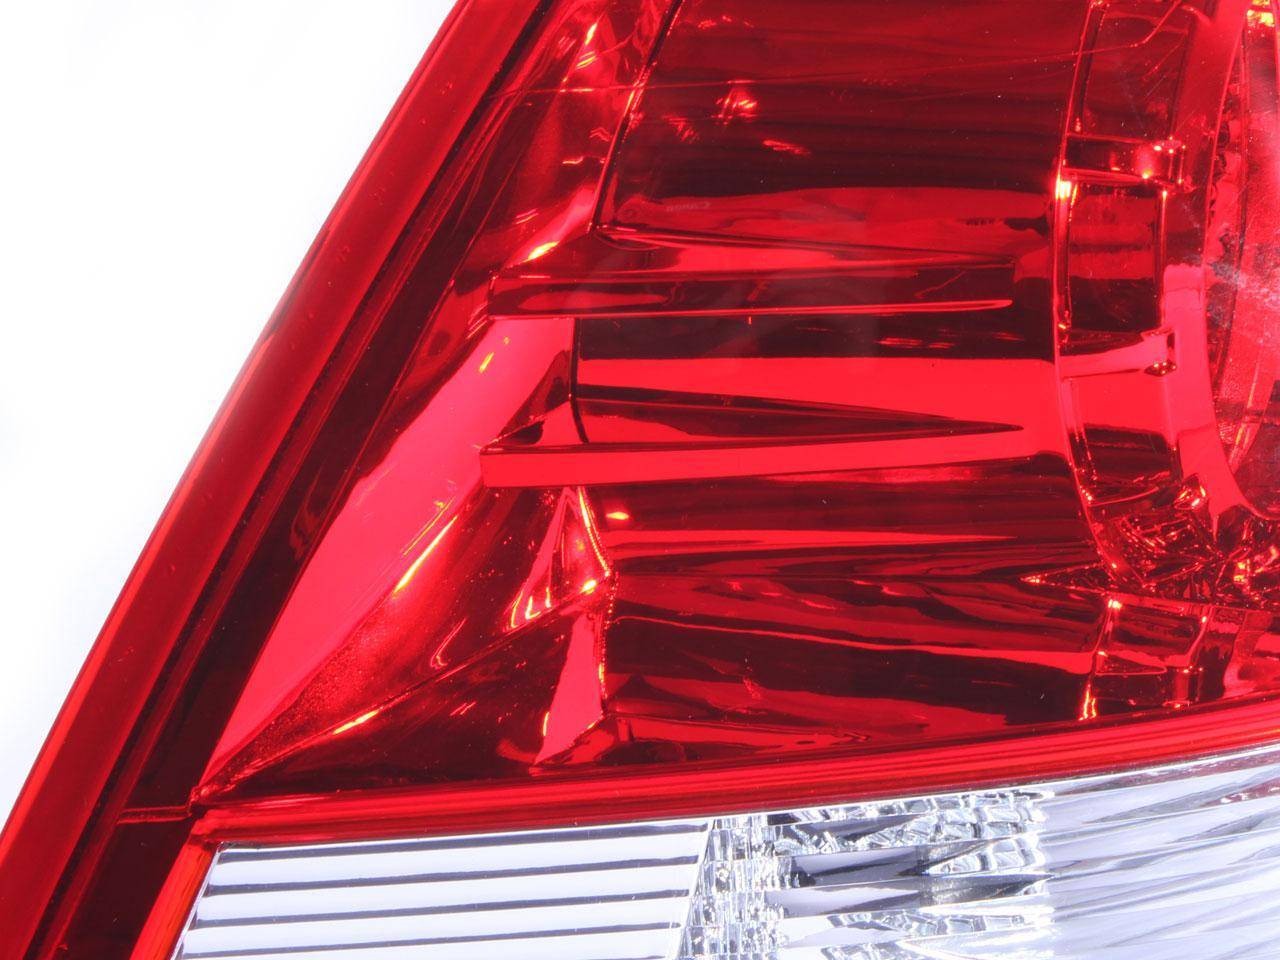 LHS Tail Light to suit Holden Commodore VE Sedan Omega Lumina SV6 SS ...